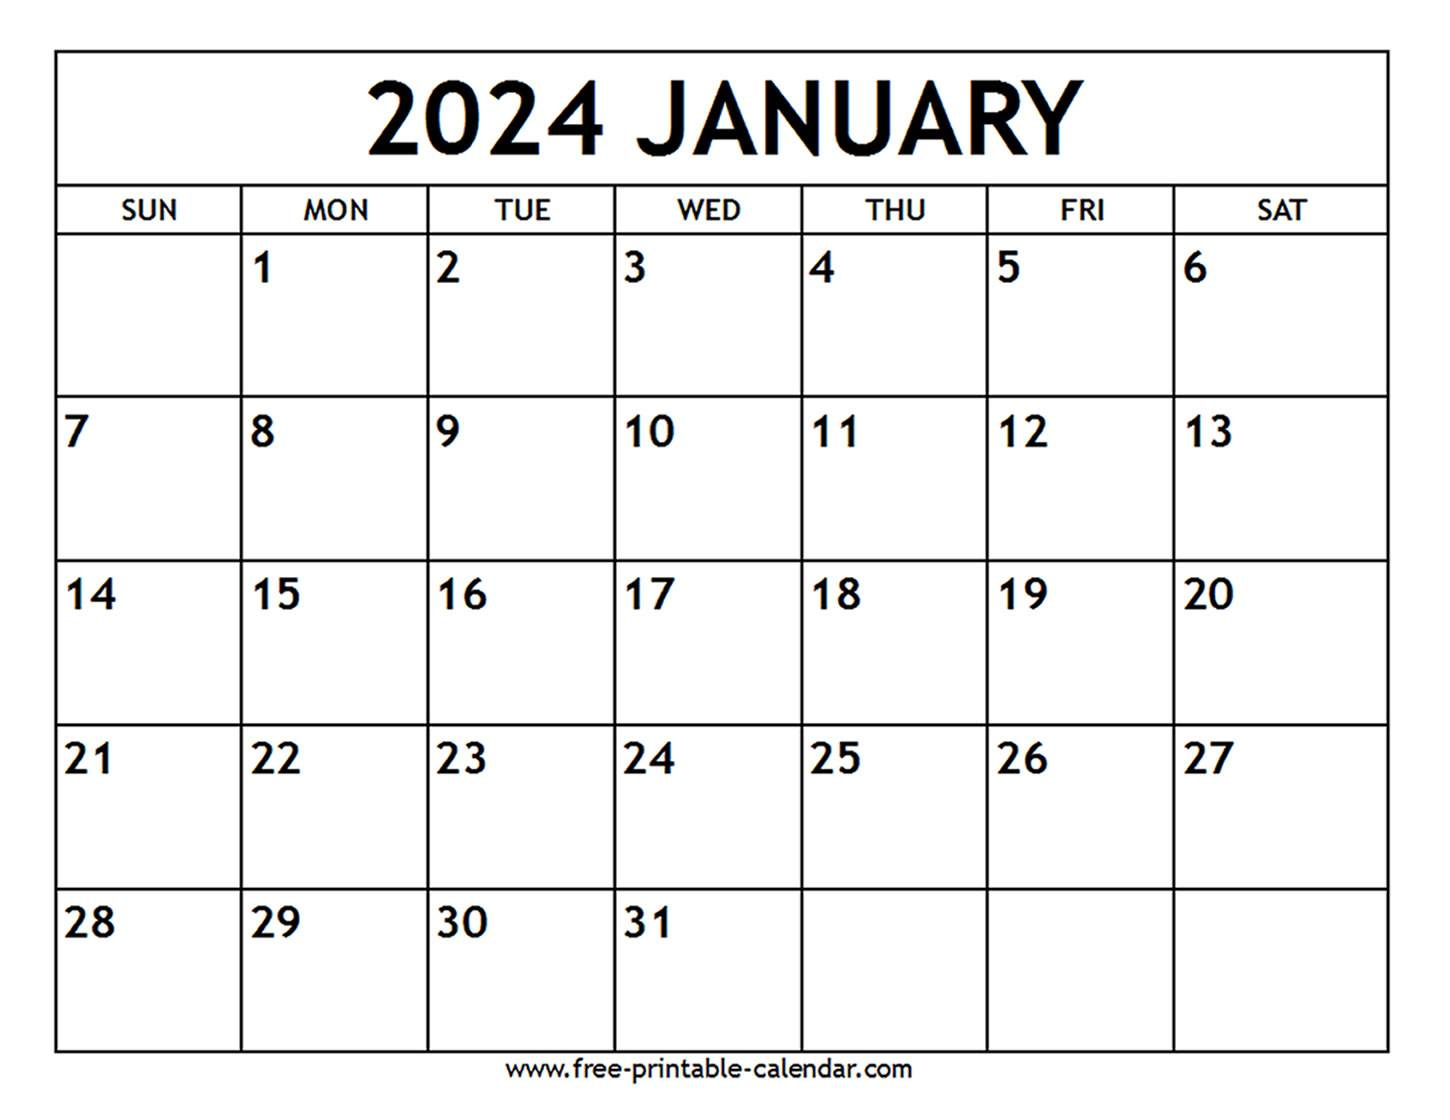 January 2024 Calendar - Free-Printable-Calendar | Printable Calendar January 2024 Australia